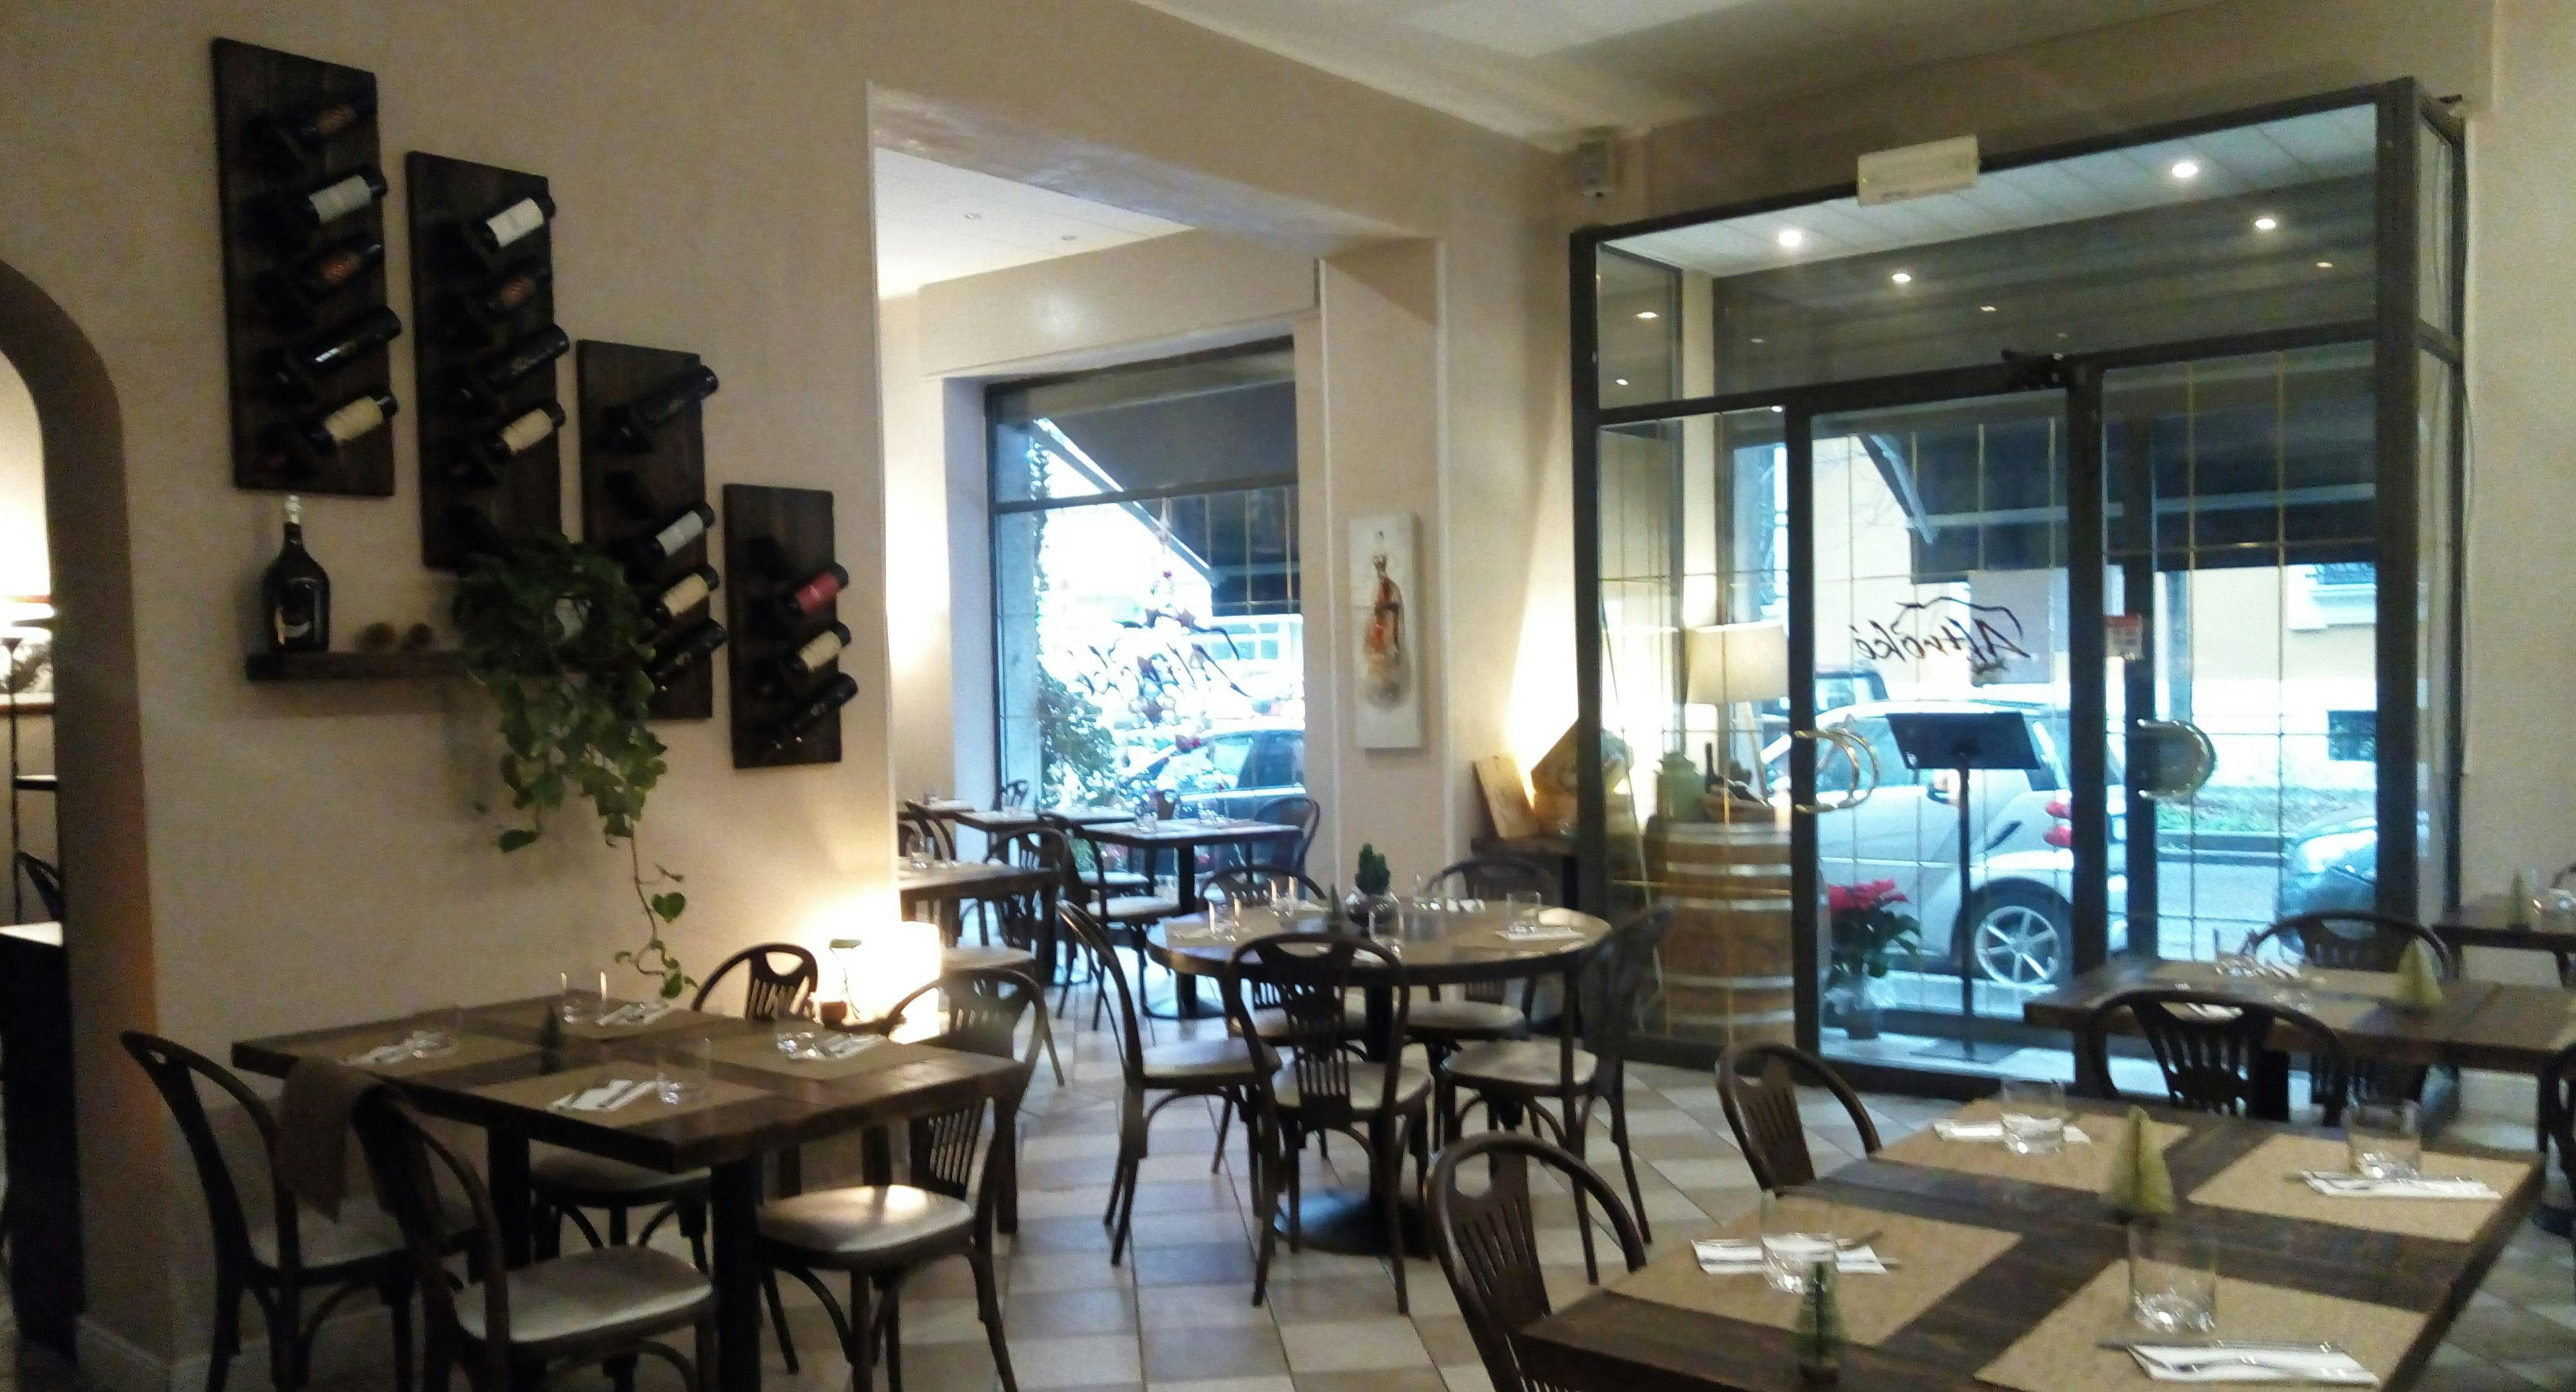 Photo of restaurant Altrokè in Porta Vittoria, Milan